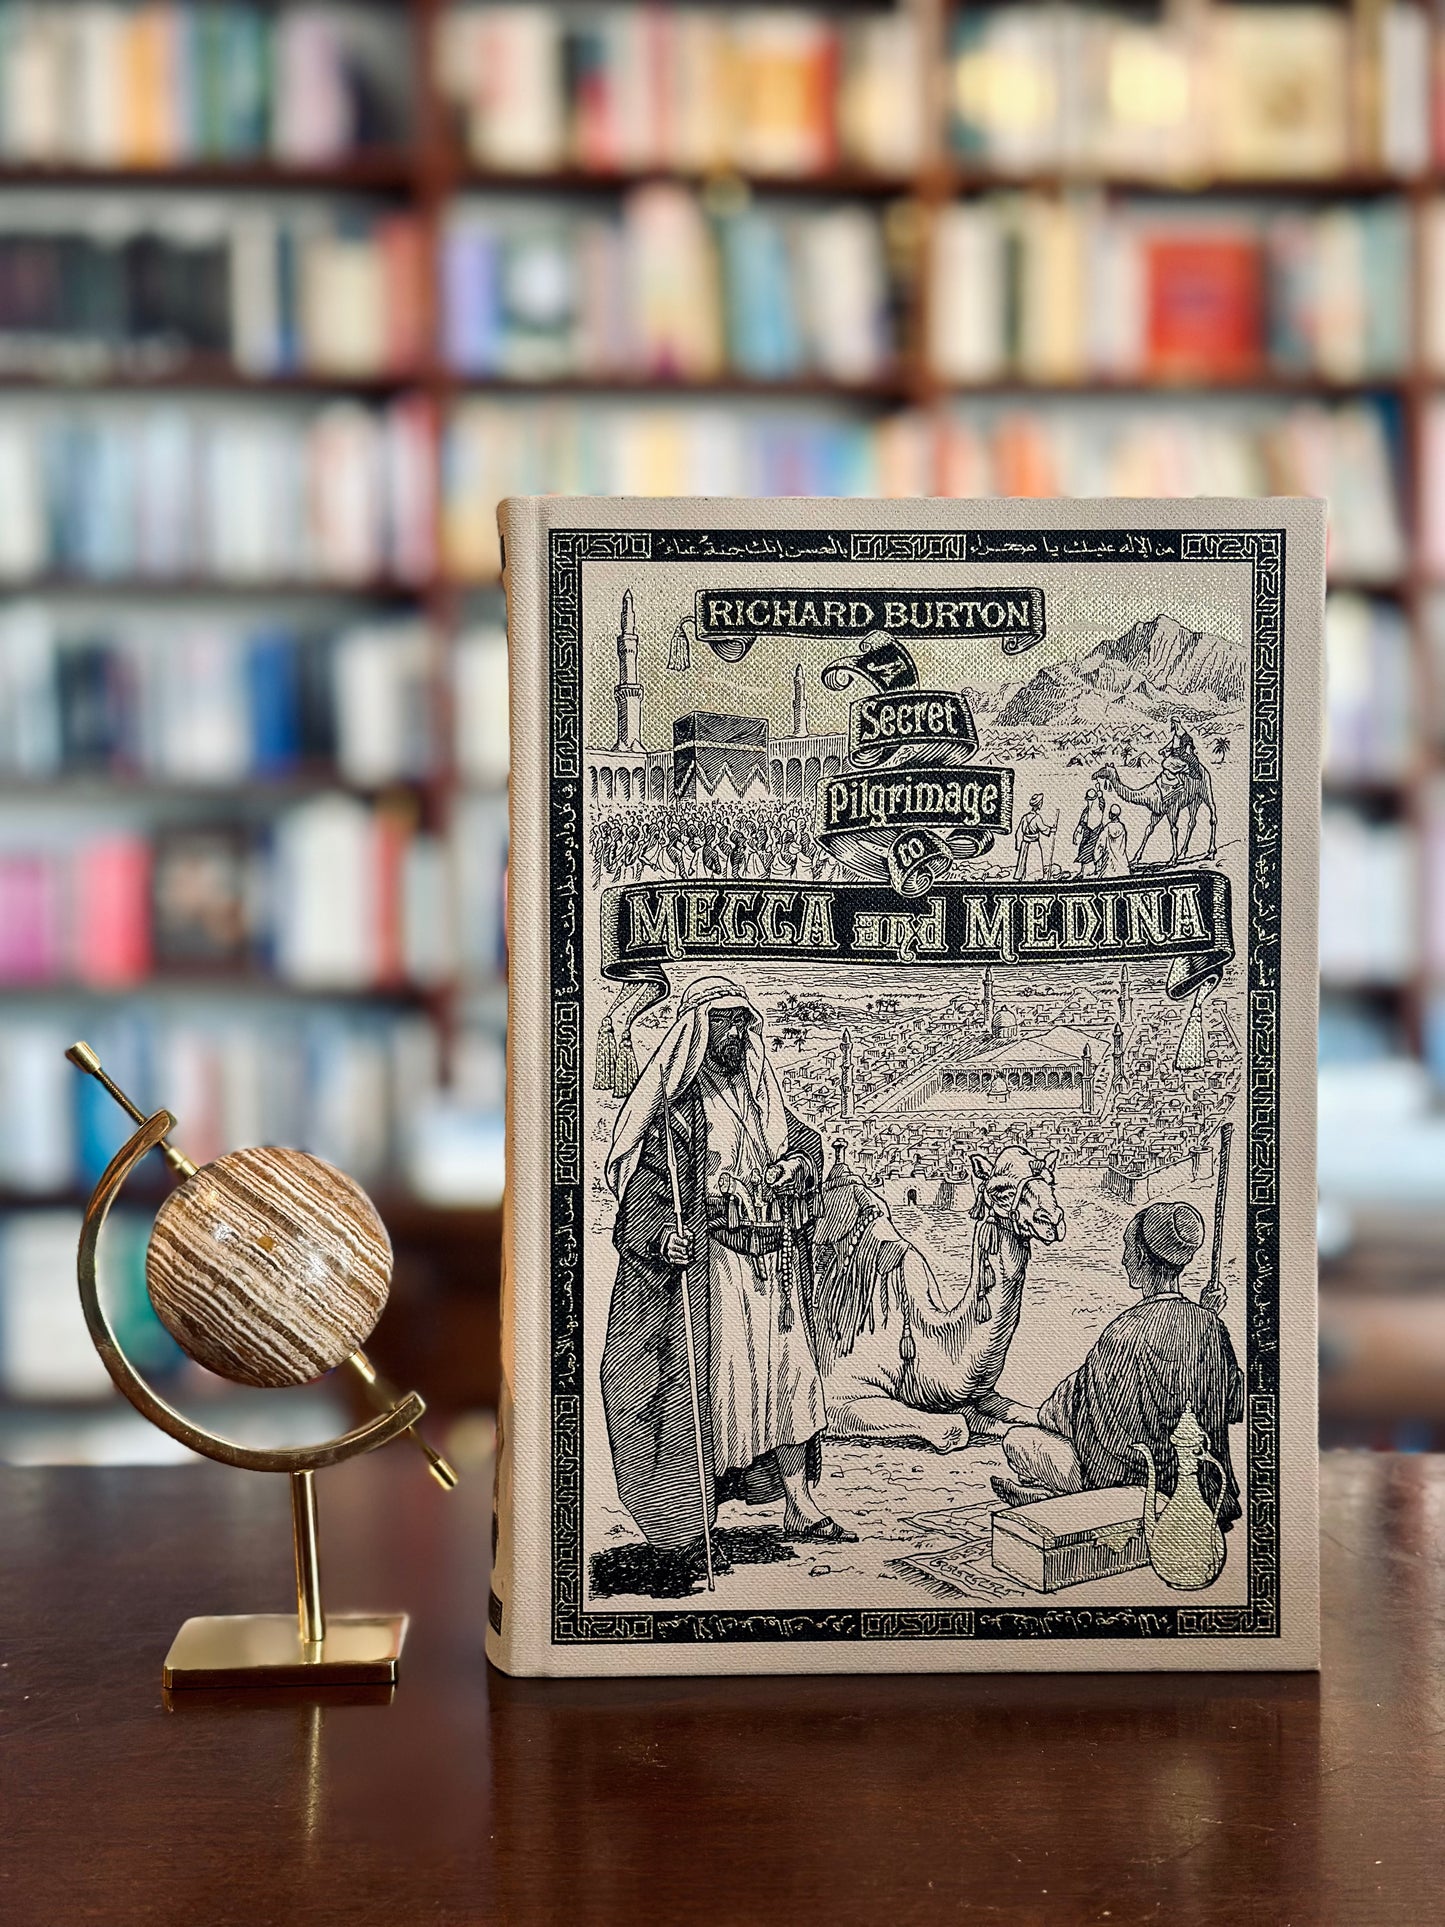 A Secret Pilgrimage to Mecca and Medina by Richard Burton